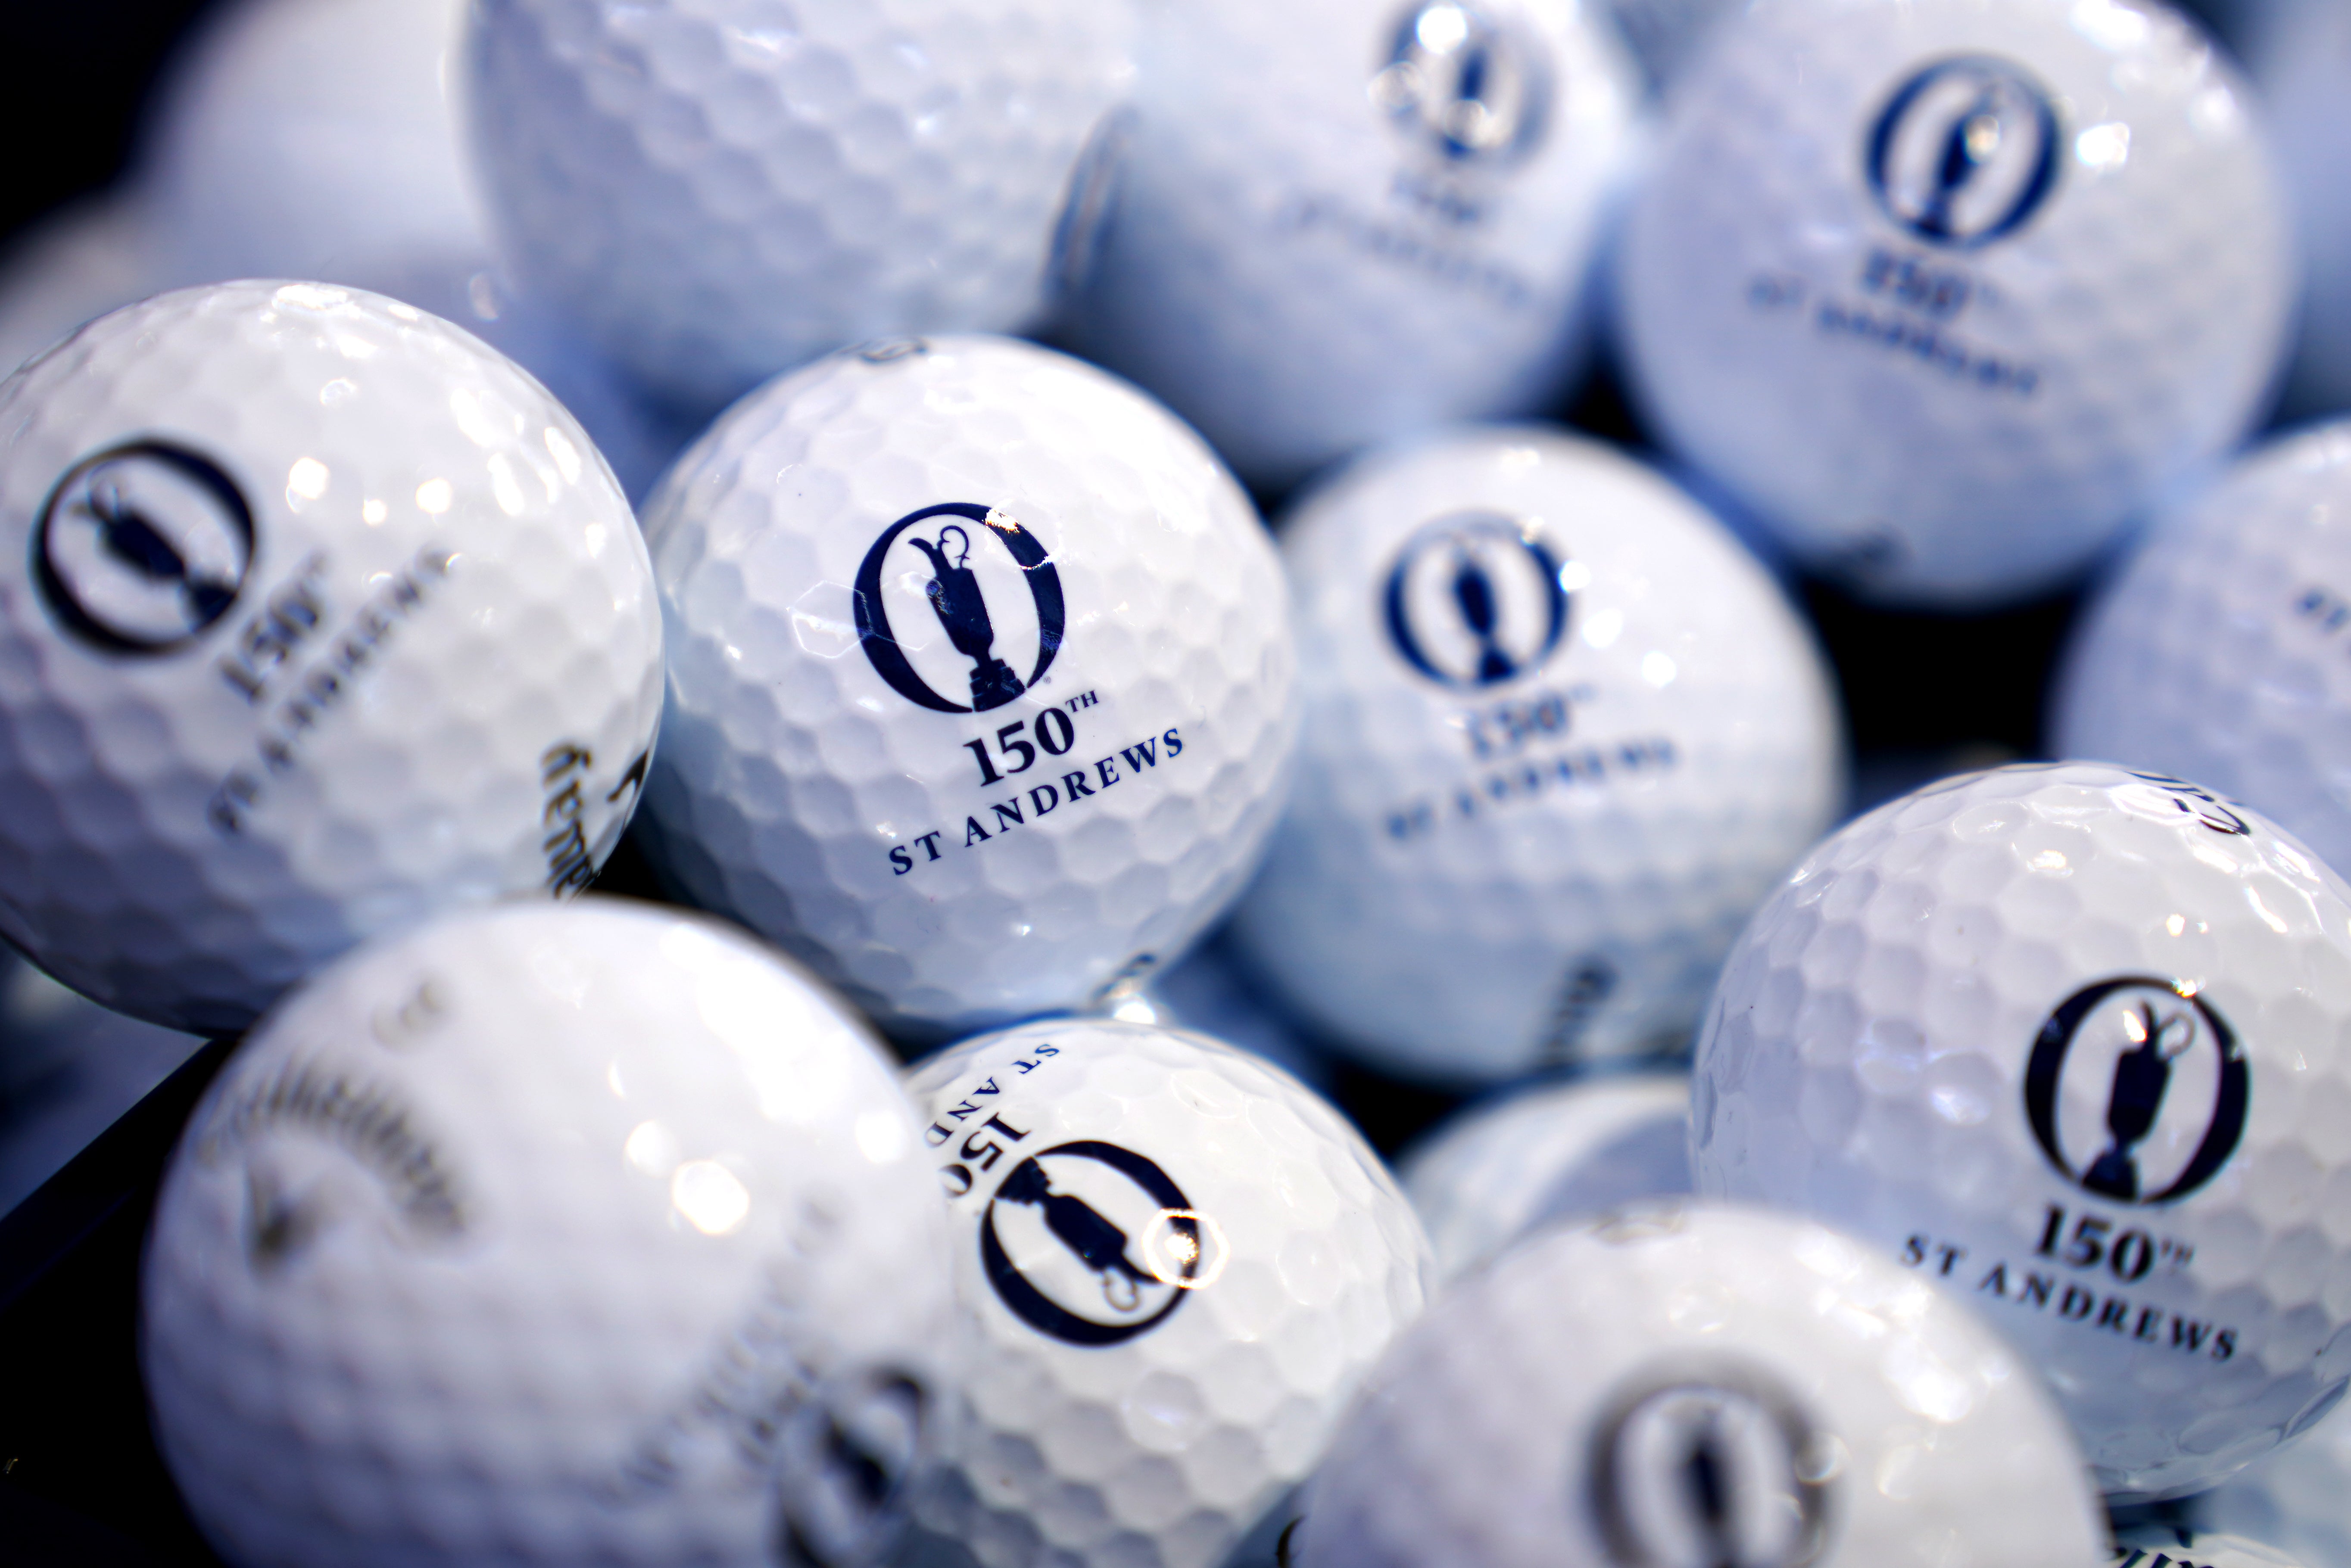 The Open Championship  Open championship, Golf tournament, Golf logo